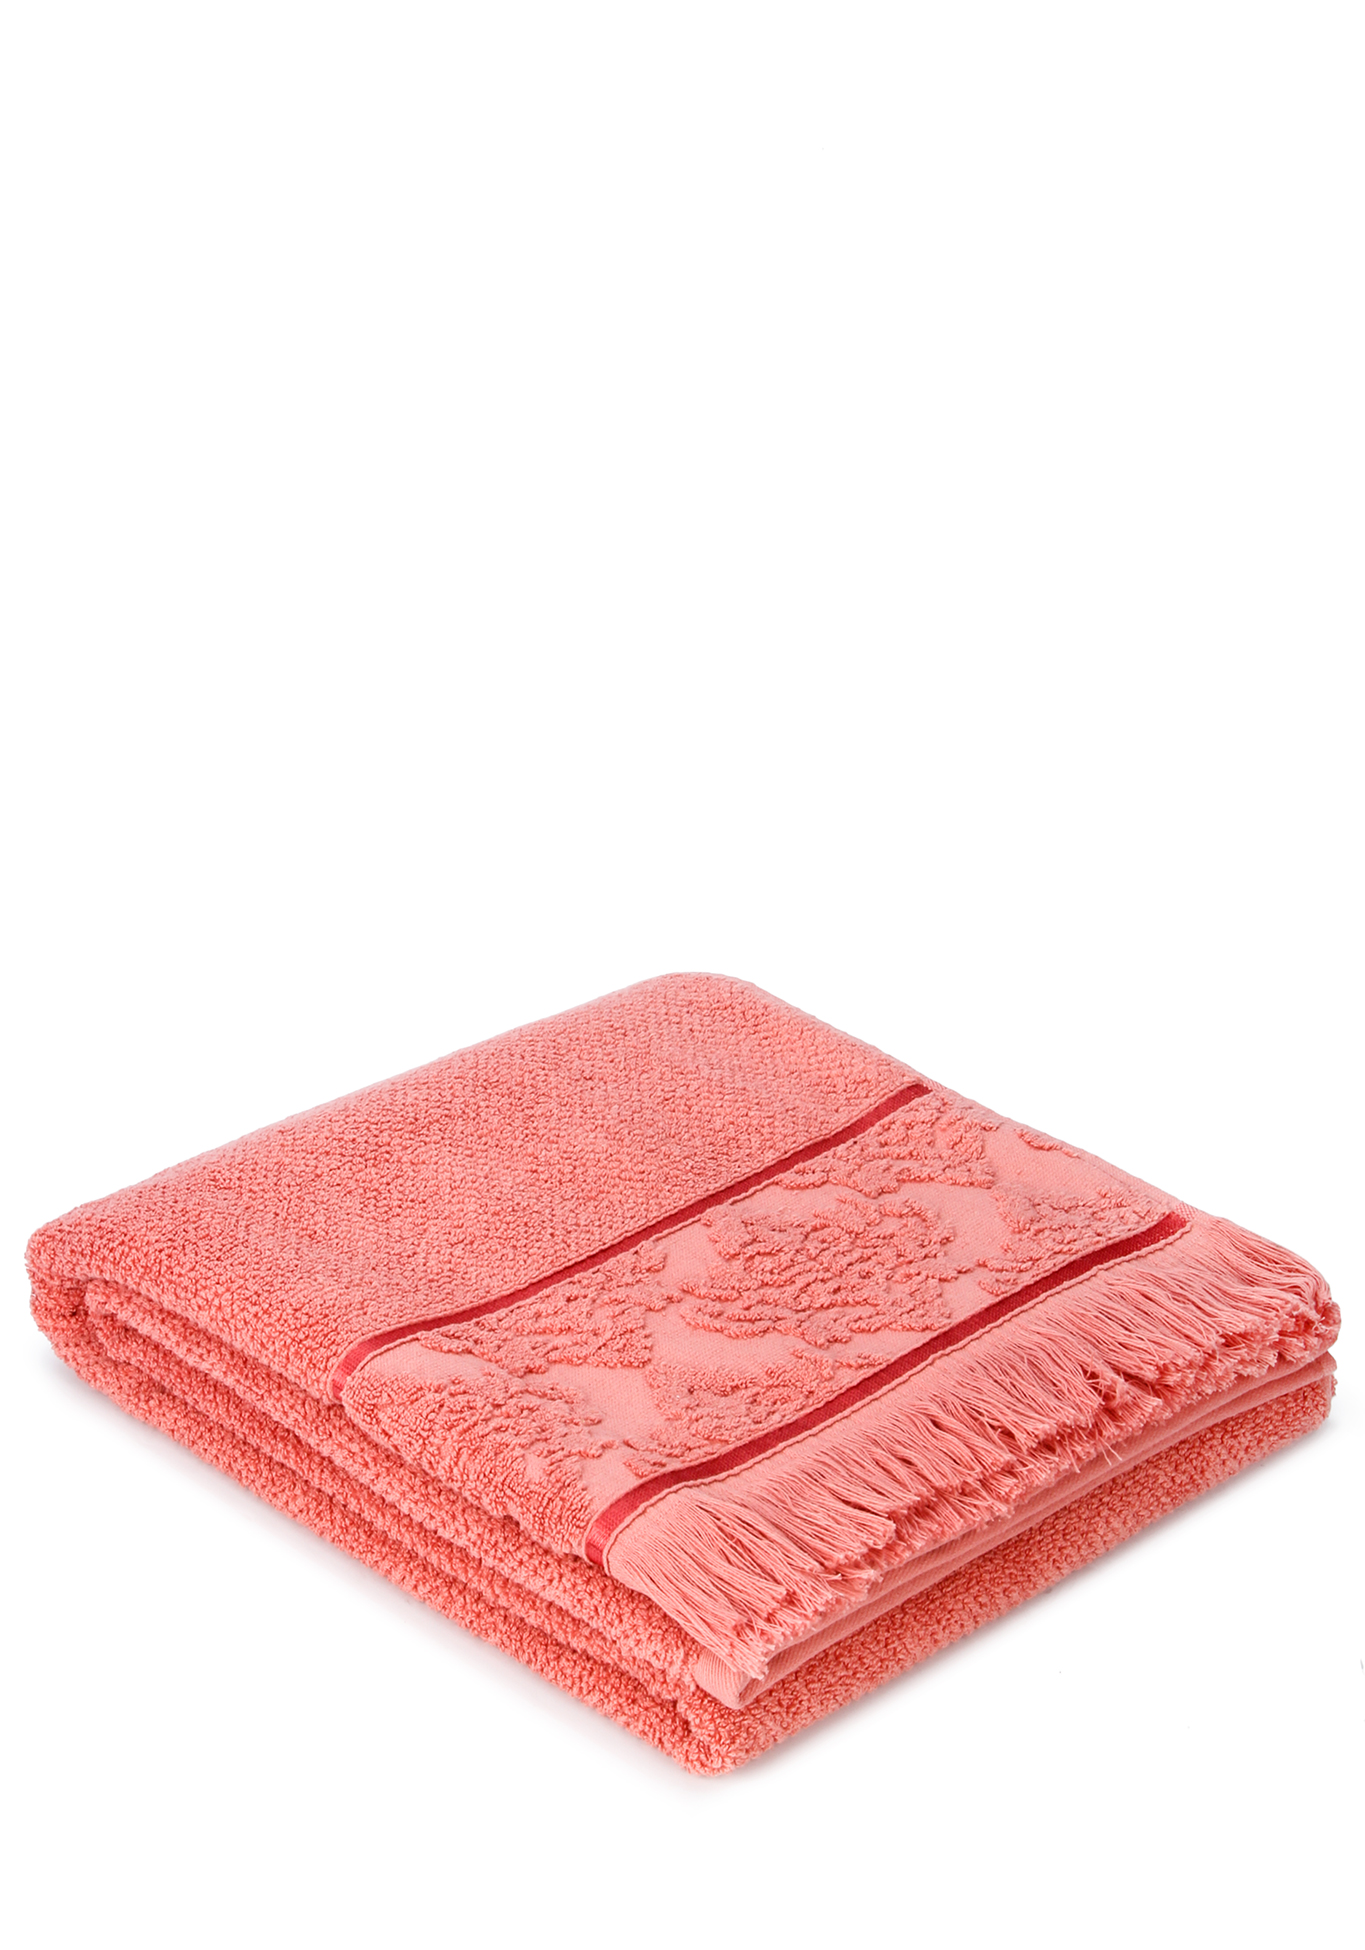 Полотенце махровое "Премиум-качество" Comfort Linе, цвет лаванда, размер 50 x 90 - фото 3